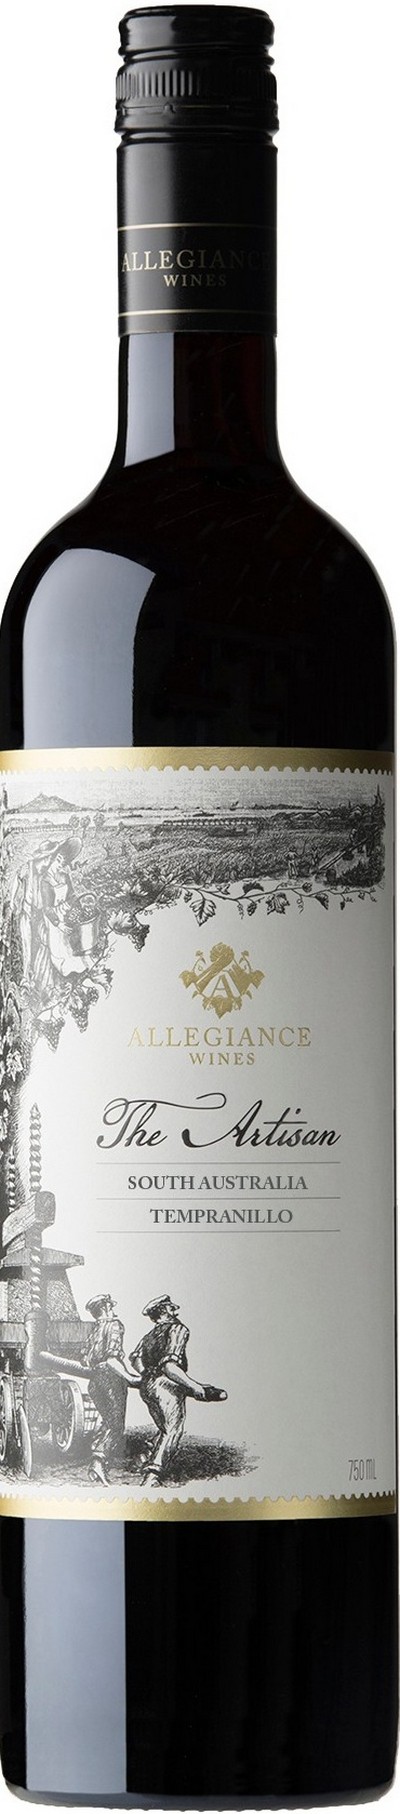 allegiance-wines-the-artisan-south-australia-tempranillo-2019